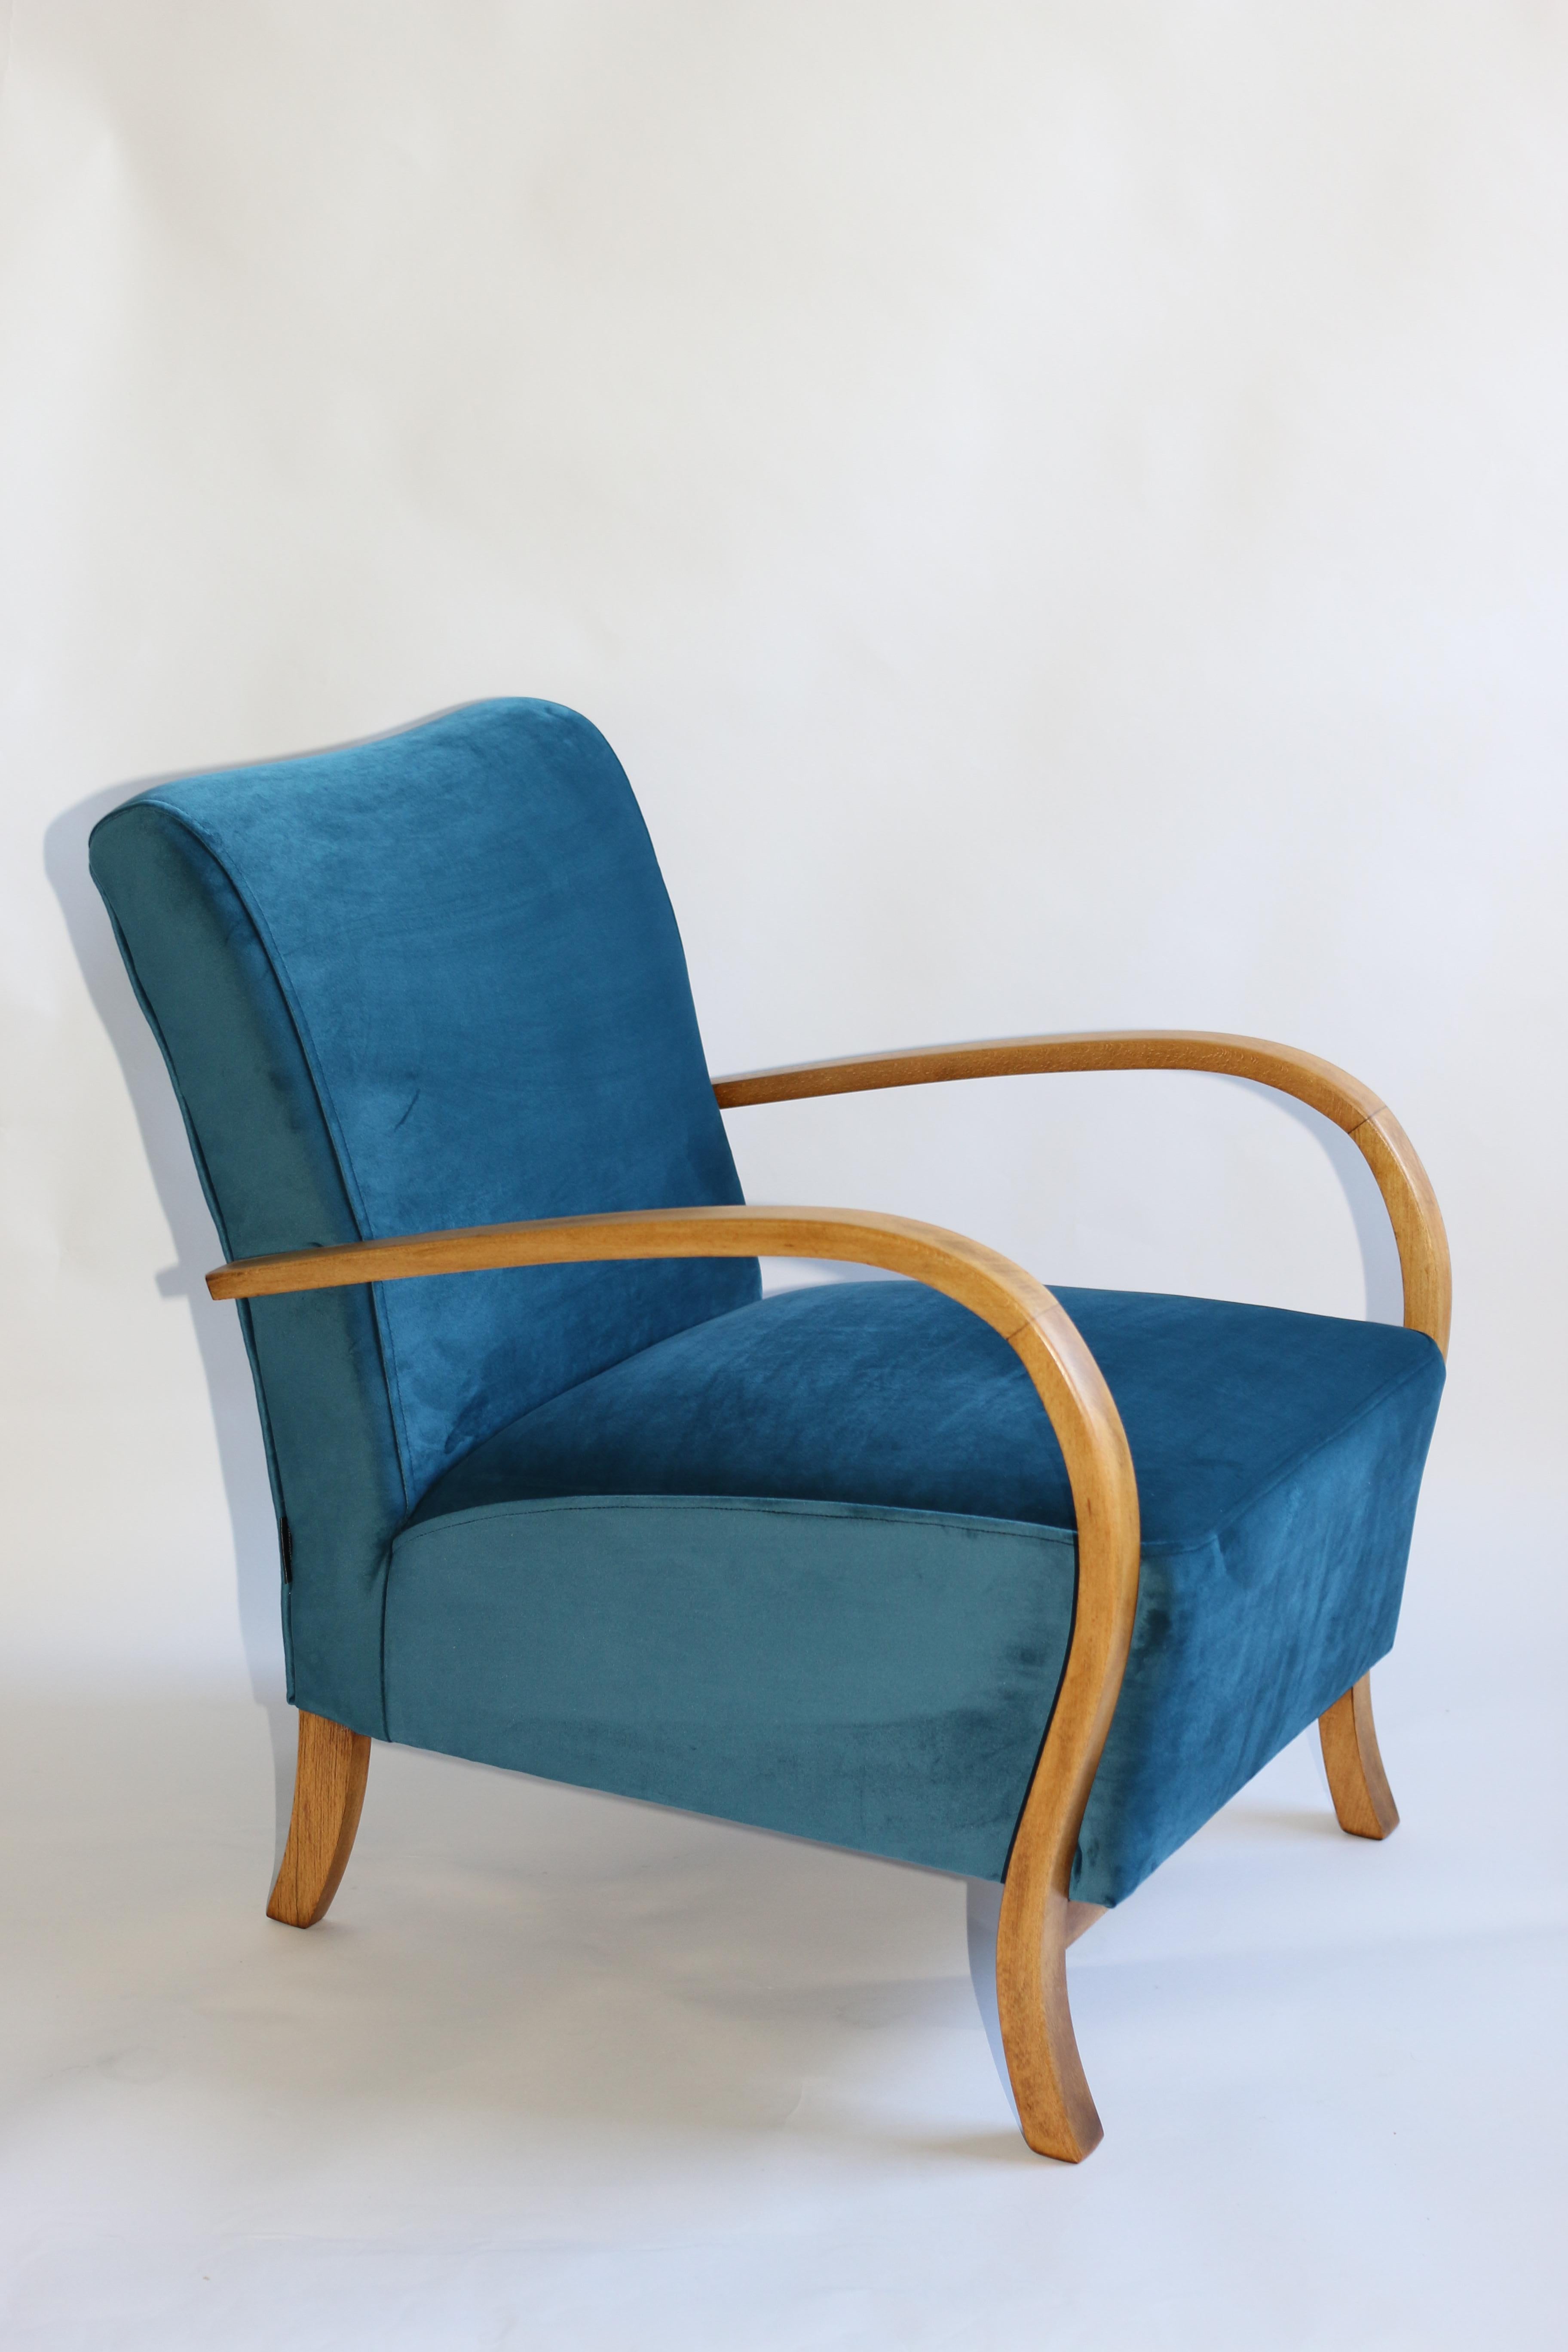 Mid-Century Modern Art Deco Armchair in Blue Marine Velvet from 20th Century For Sale